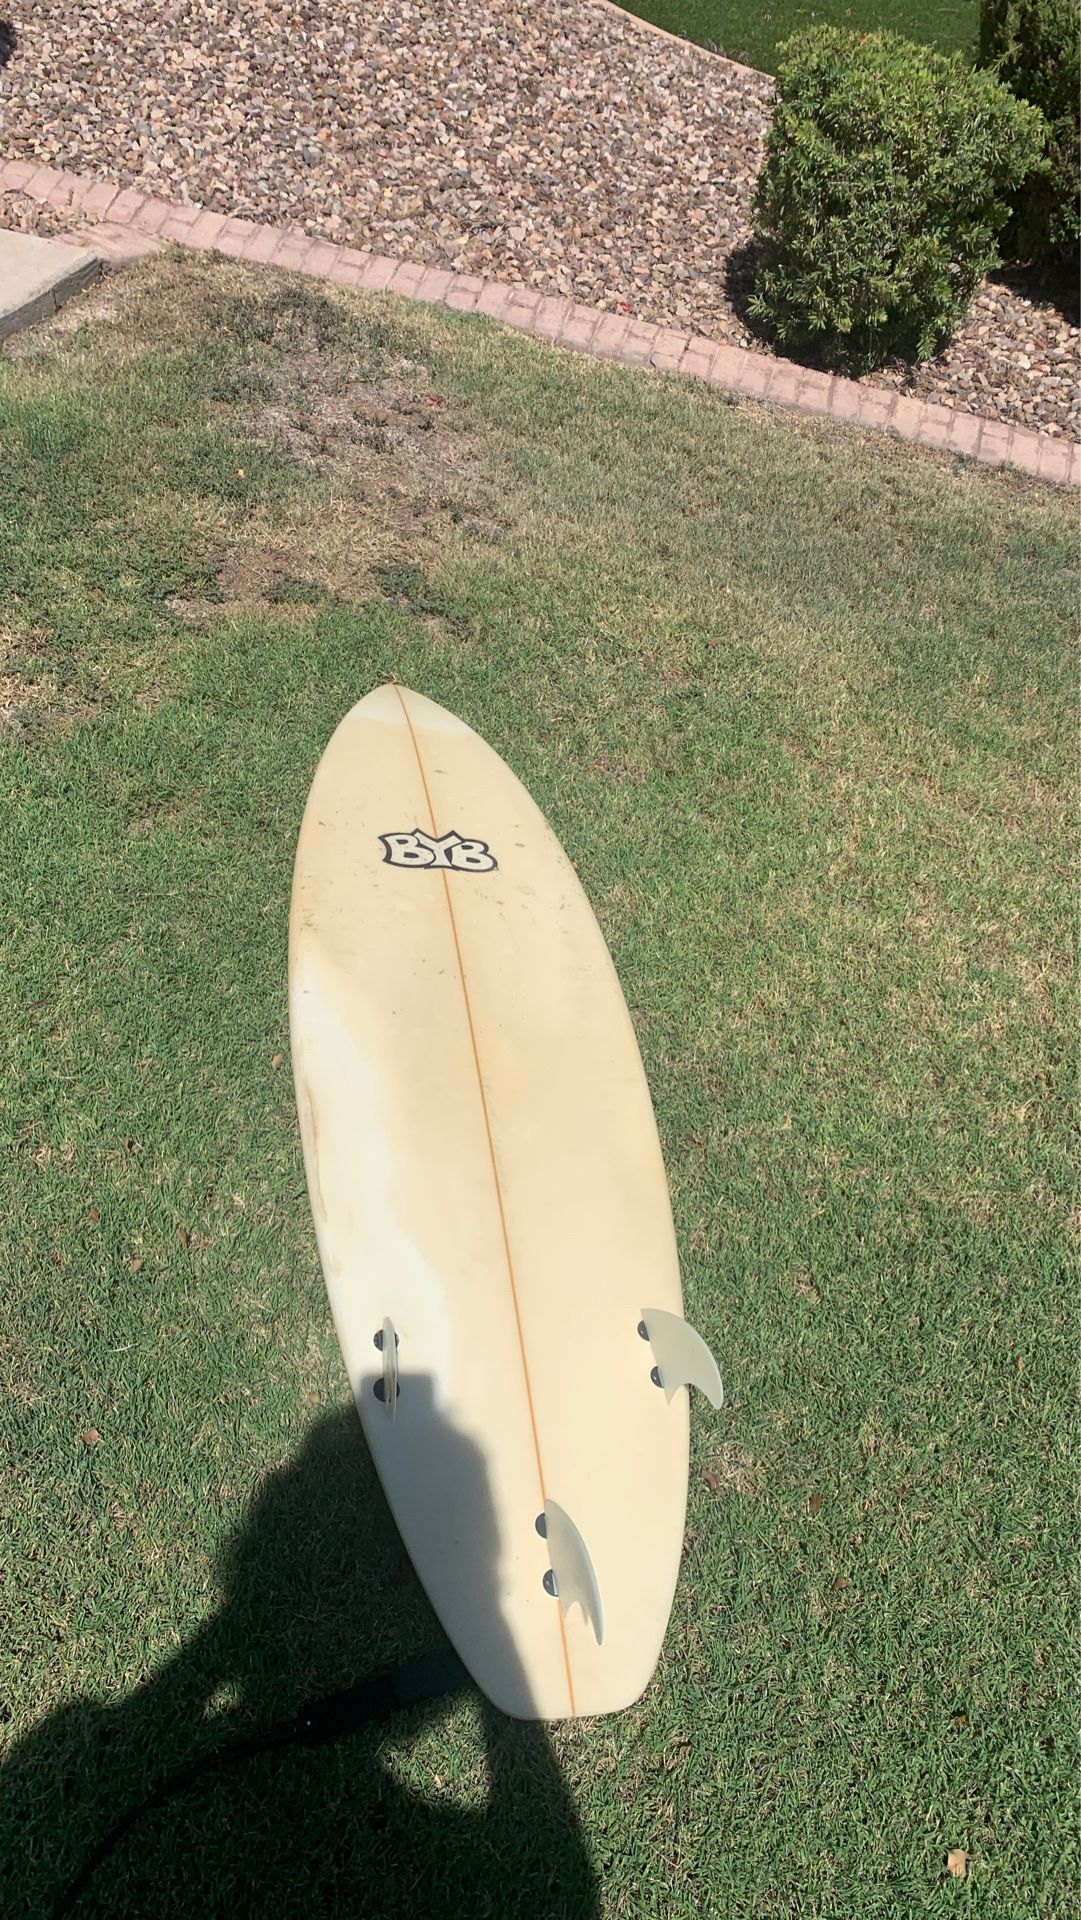 BYB surfboard